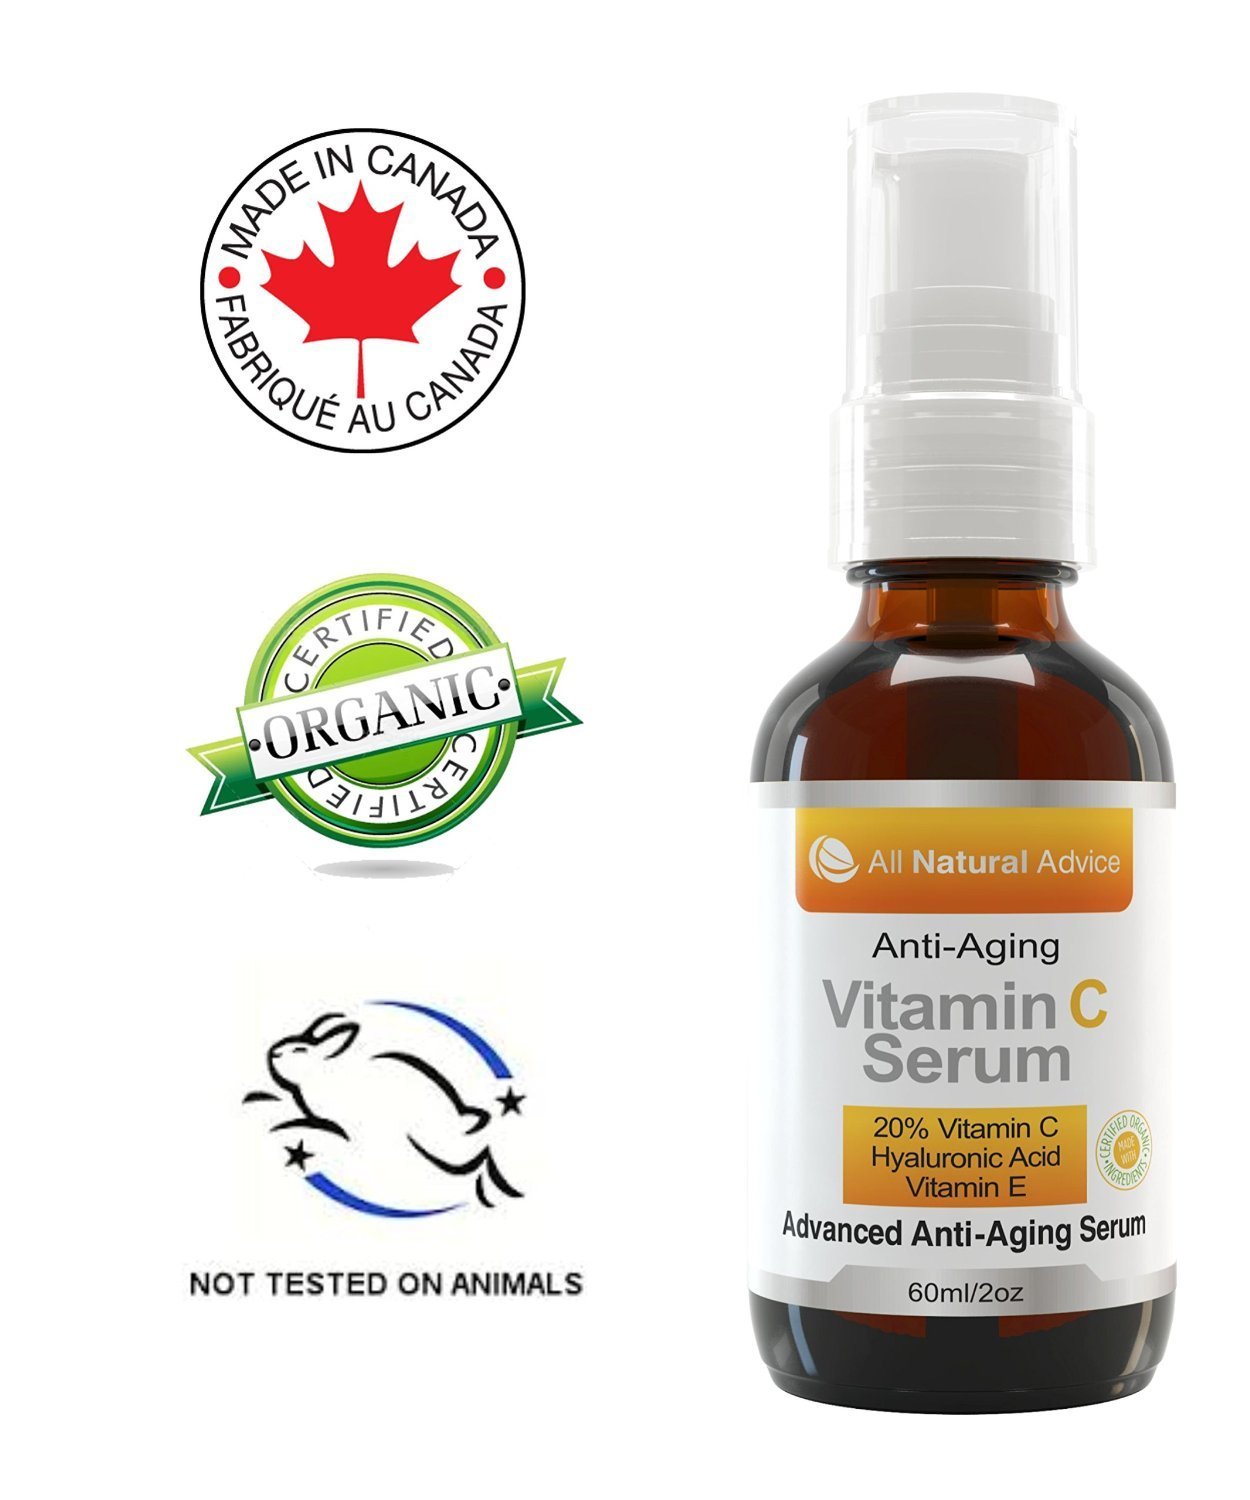 Product Testing: All Natural Advice Vitamin C Serum